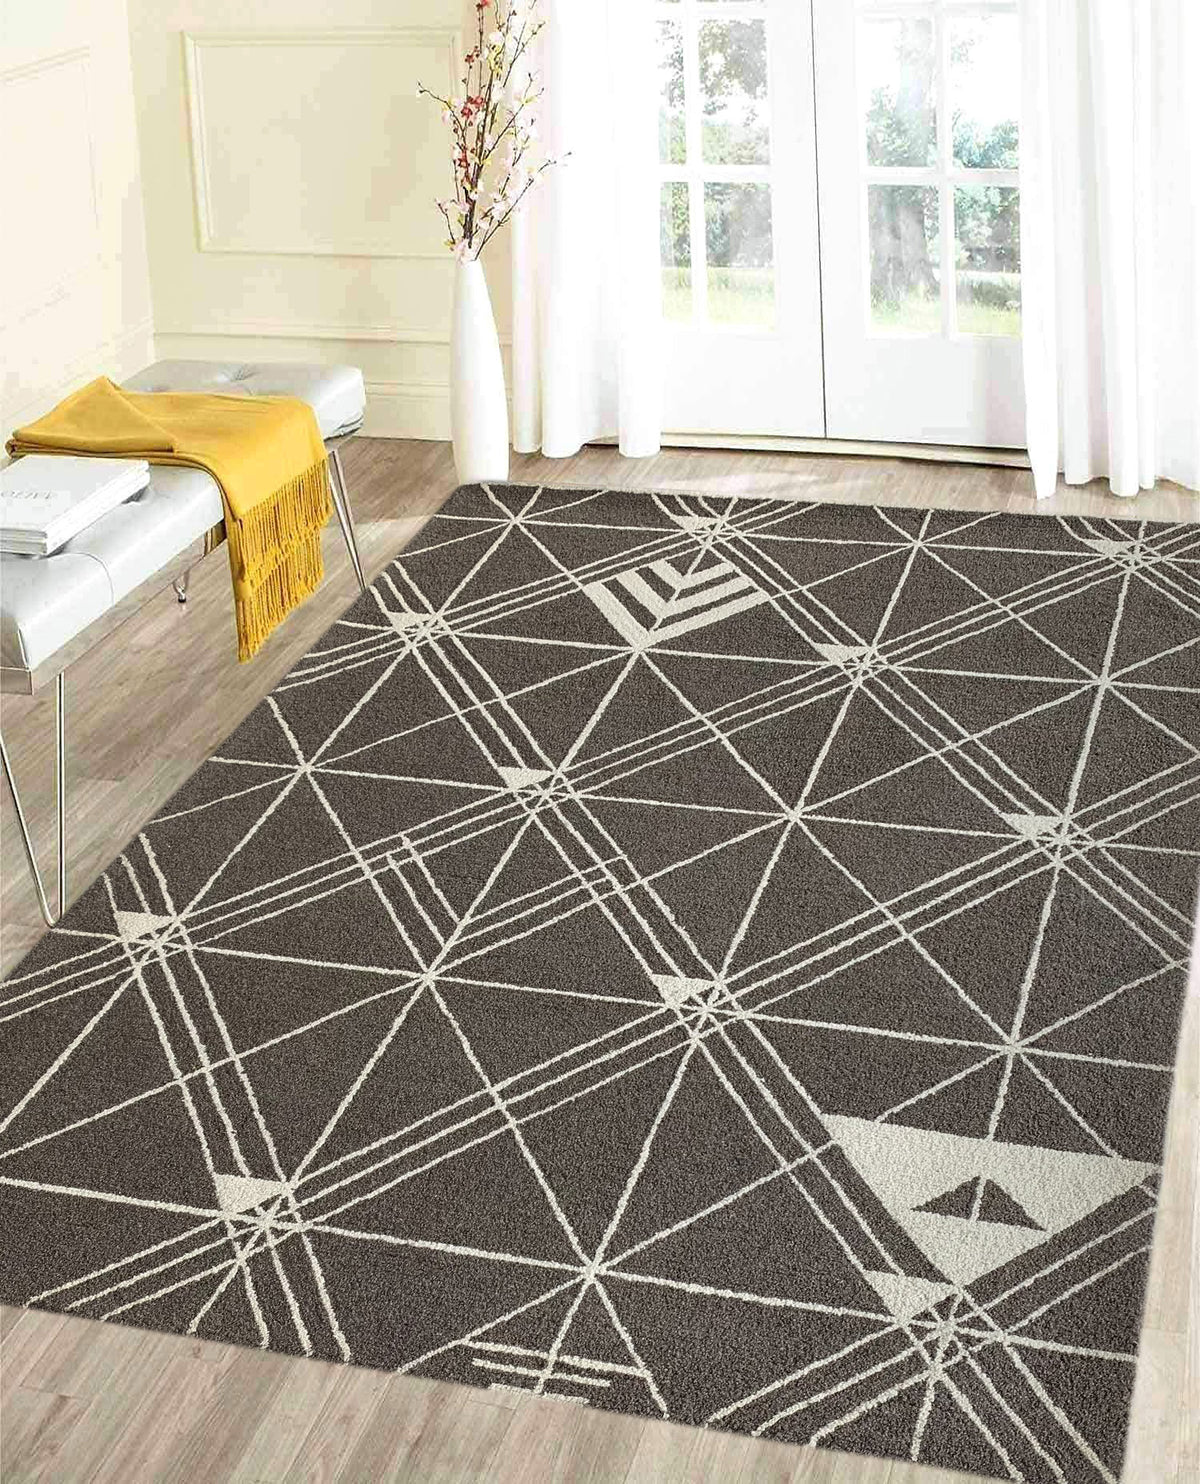 Rugslane Grey & White Color  Modern Design 100% New Zealand Wool Handmade Carpet 5.7ft x 7.9ft